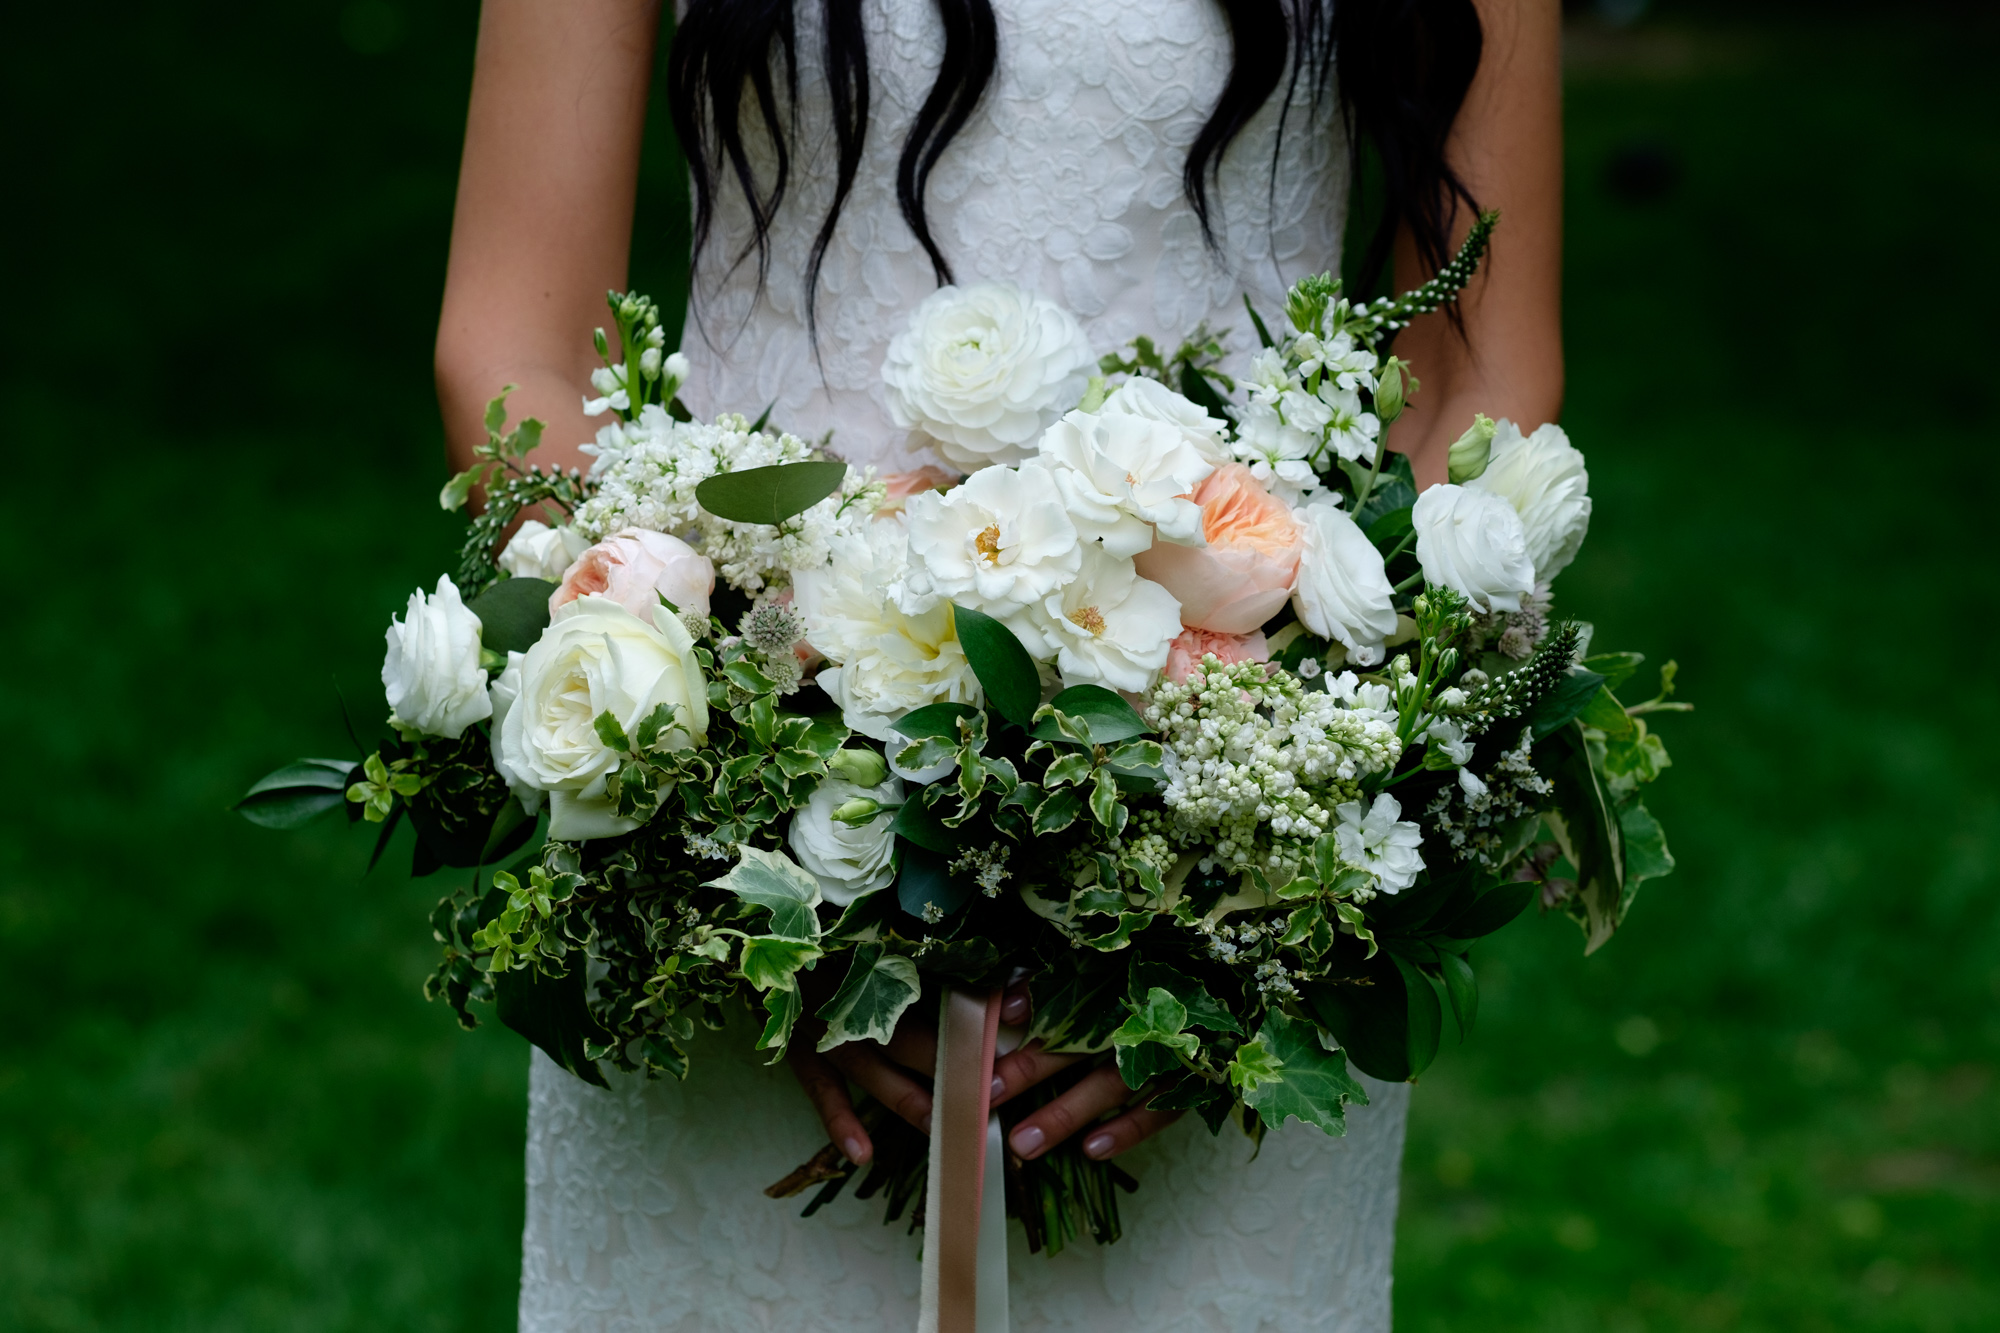  A detail shot of Danni's beautiful bouquet of wedding flowers. 